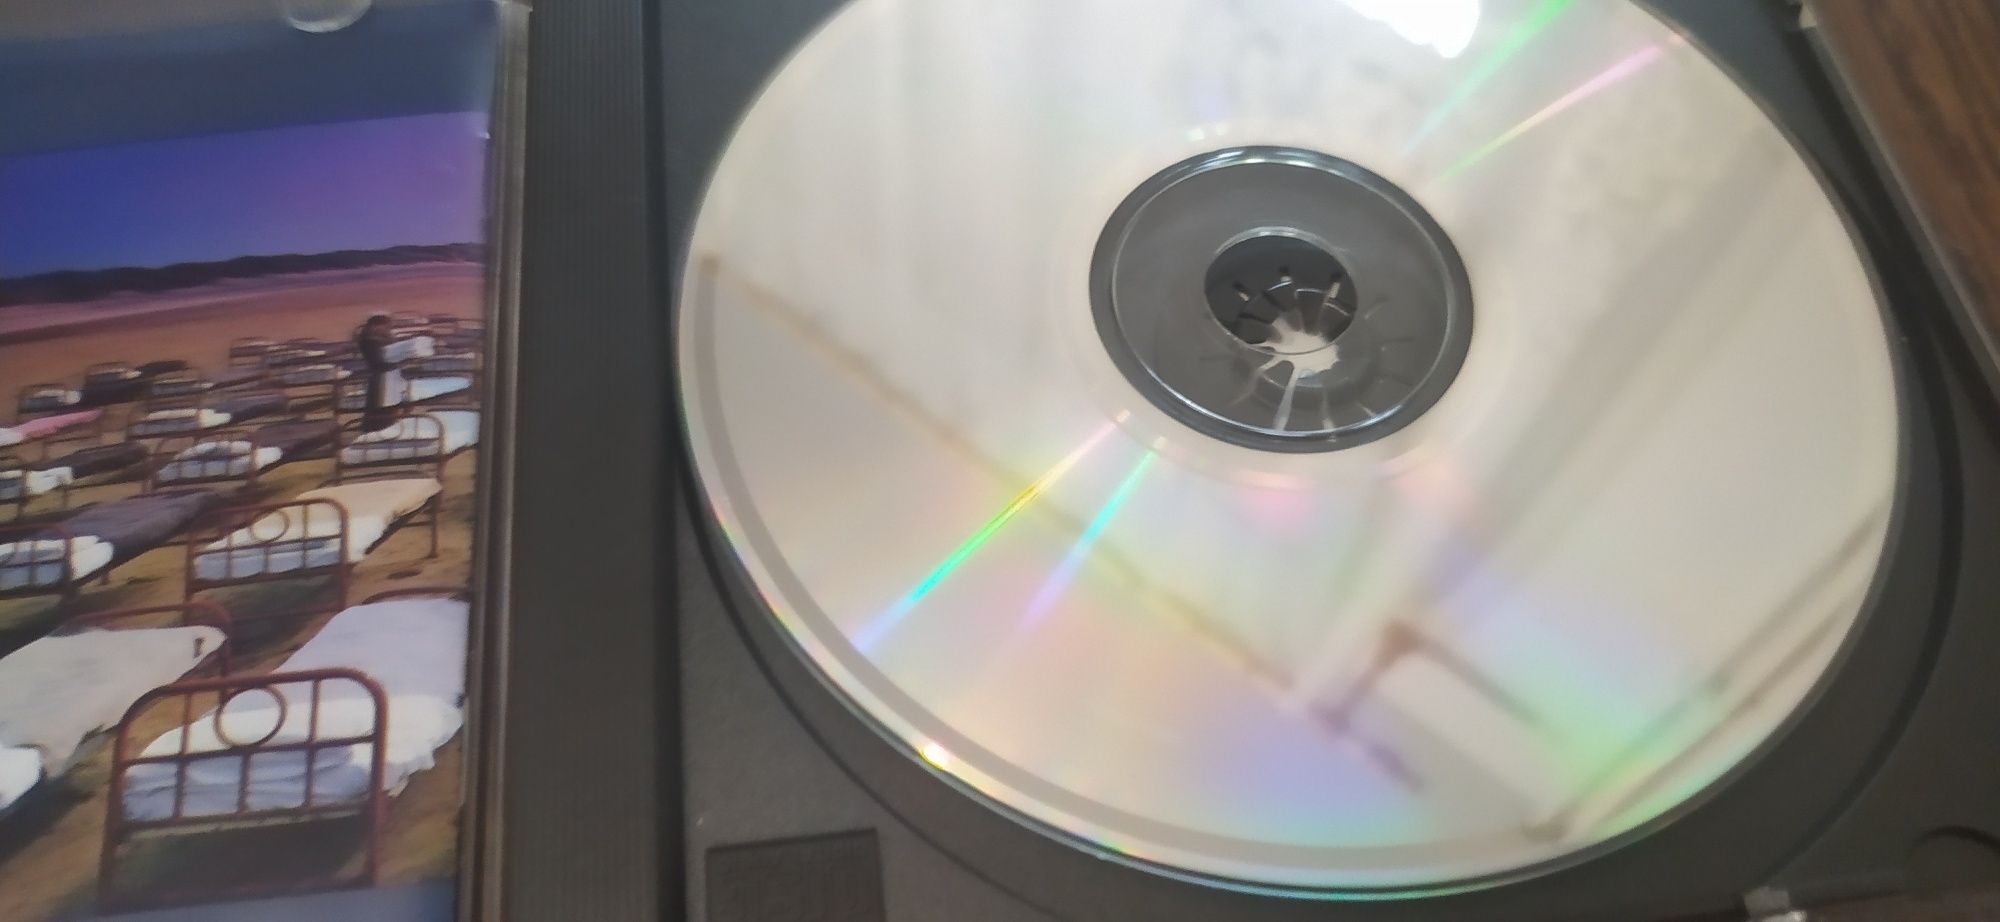 Pink Floyd CD polecam